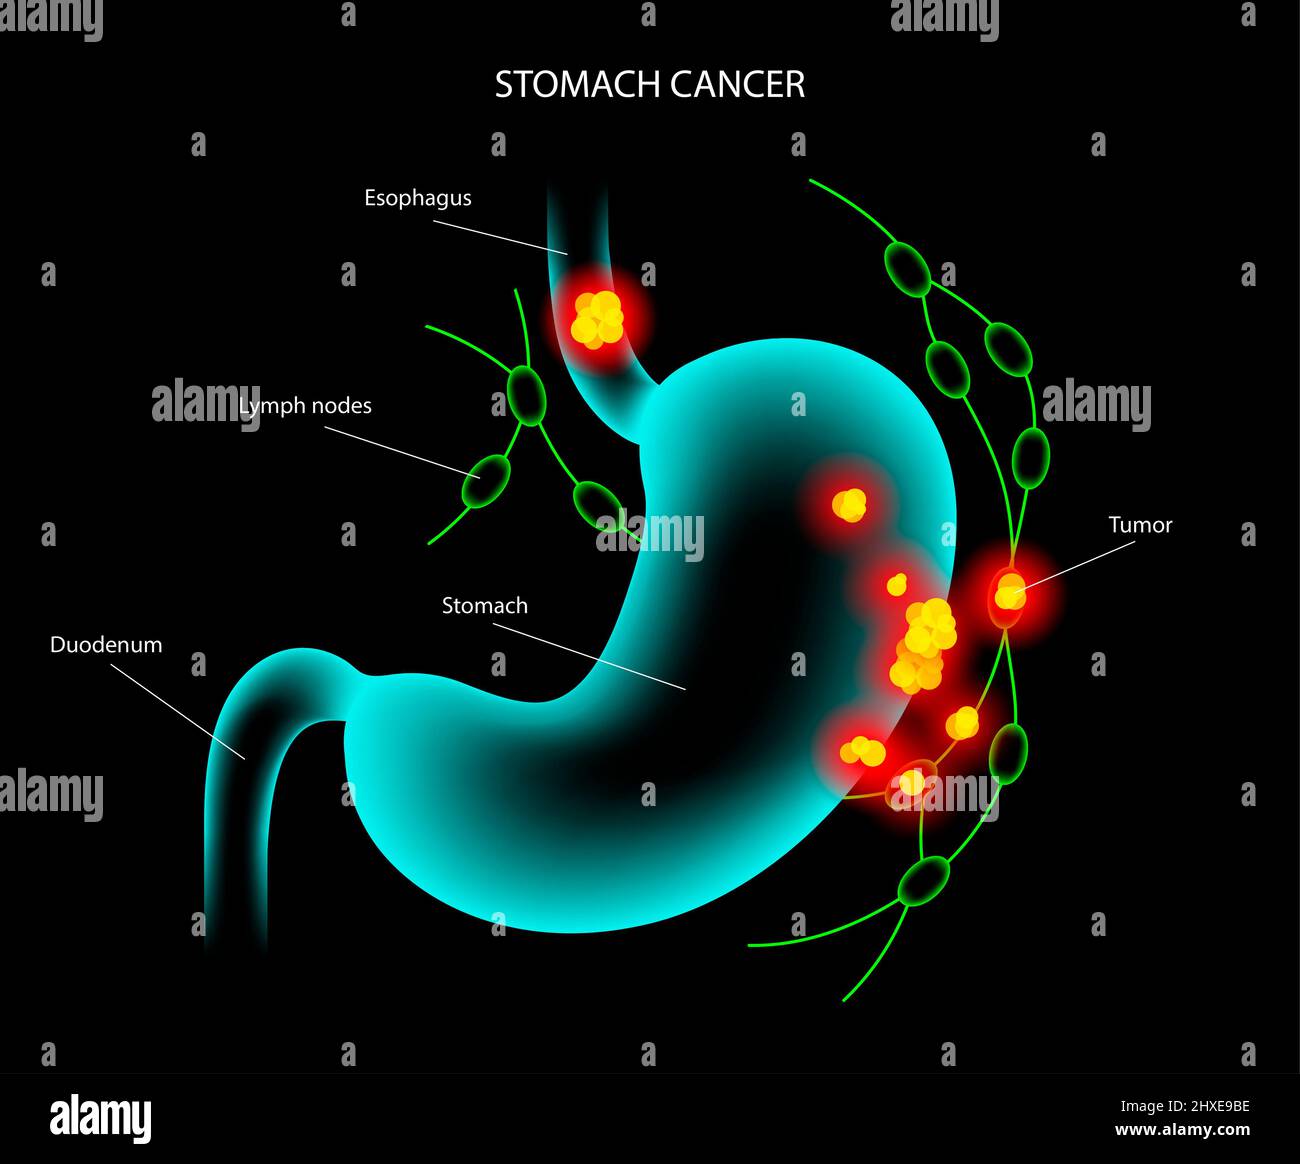 Stomach cancer, illustration Stock Photo